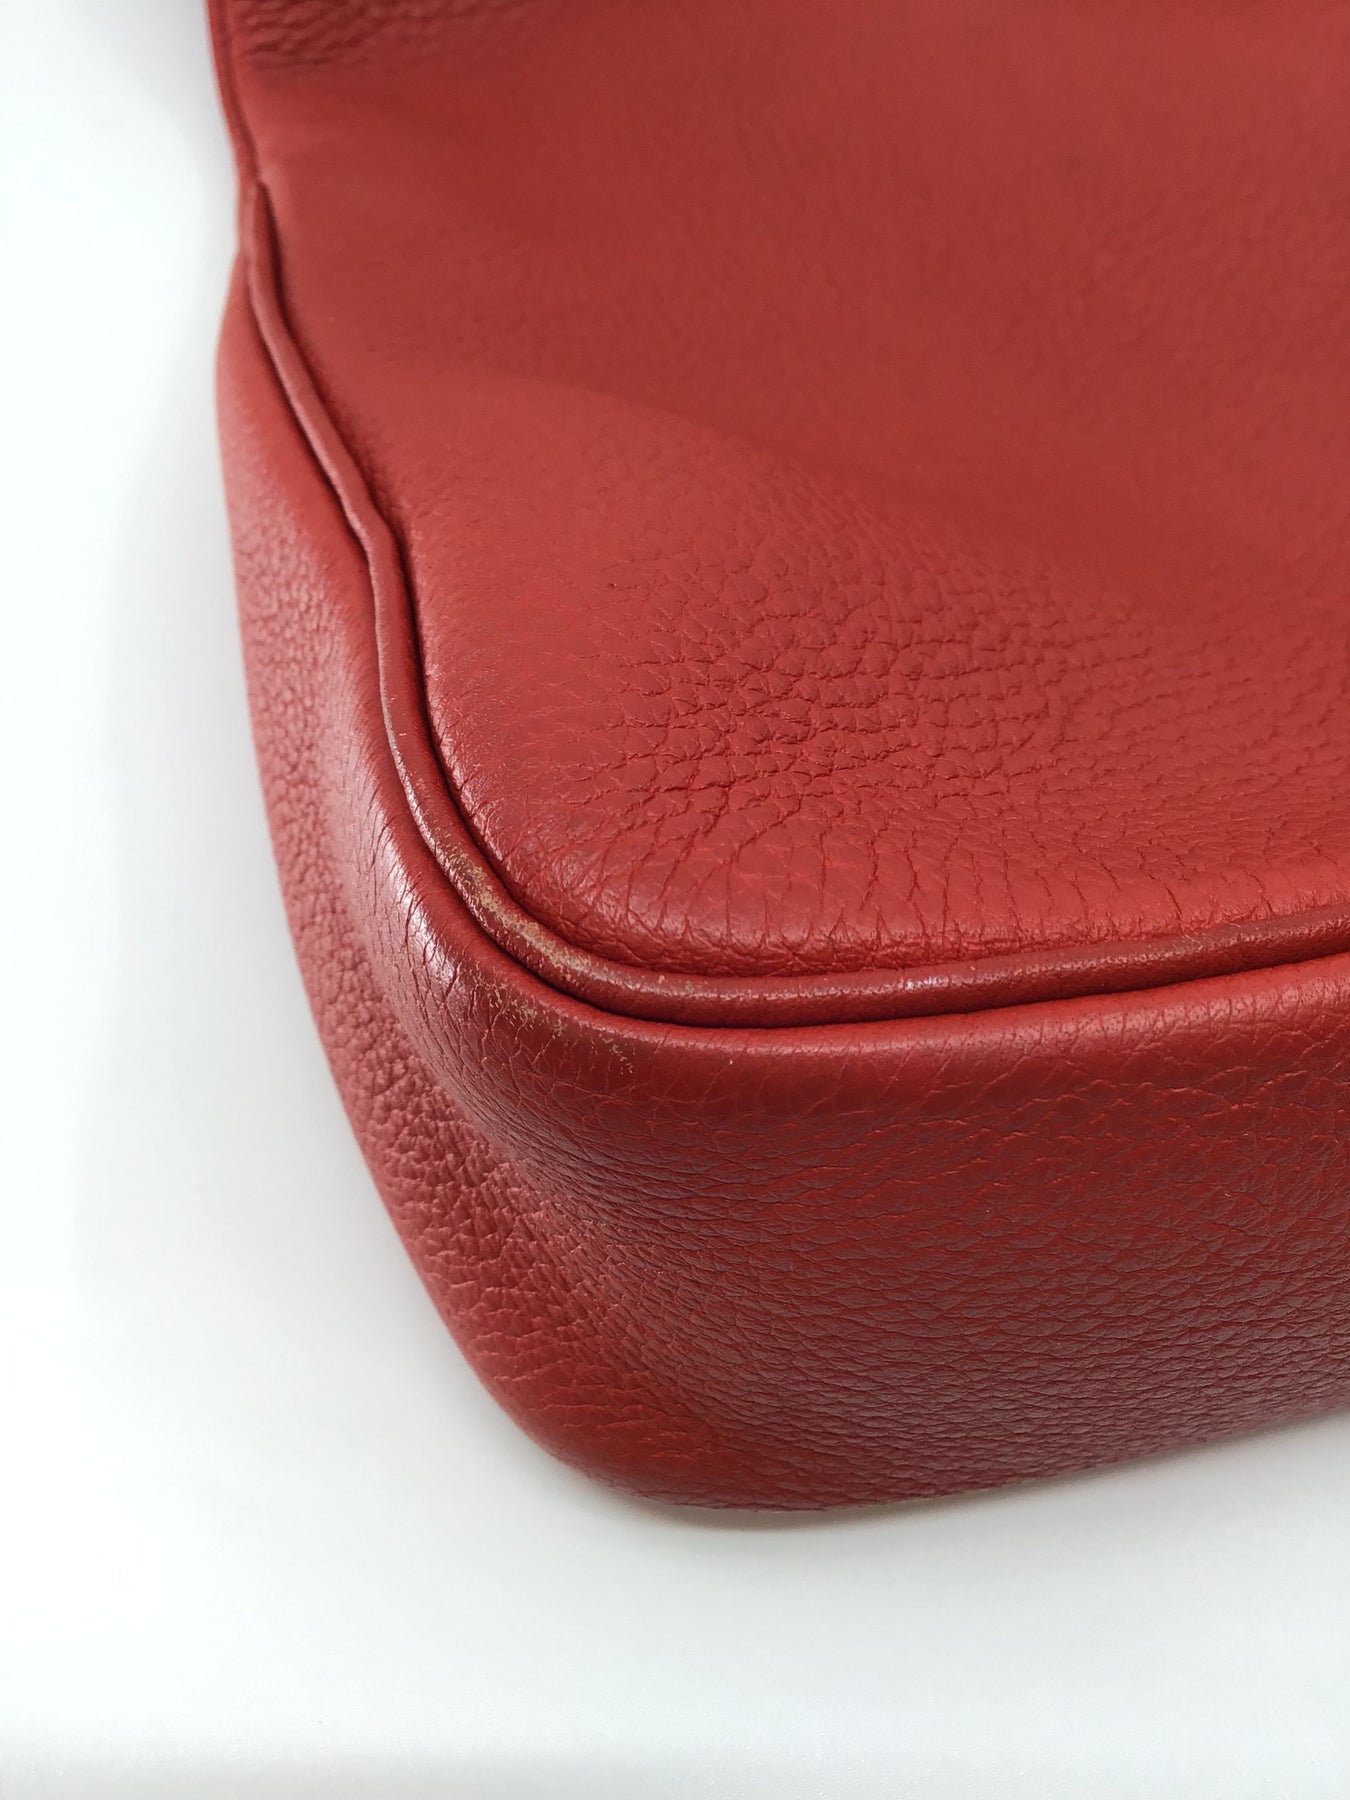 Hermes Massai Pm Red Taurillon Clemence Leather Hobo Bag